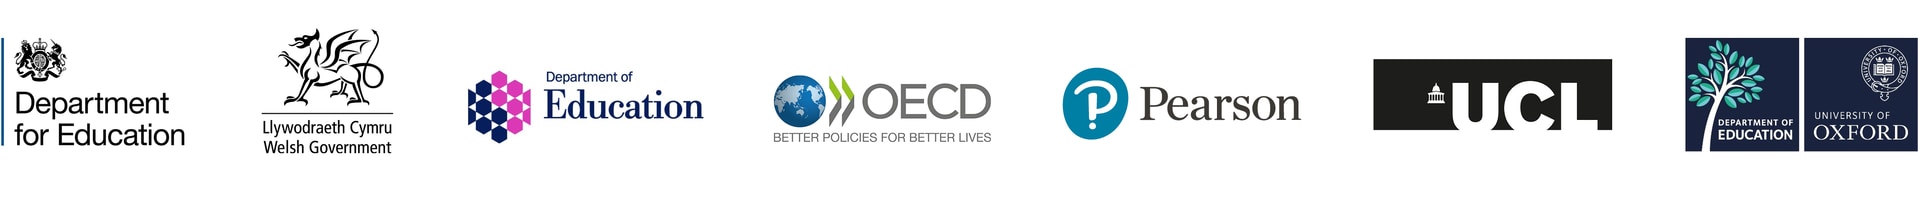 Partner logos: Department for Education (England), Welsh Government, Department of Education (NI), OECD, Pearson, UCL, Department of Education University of Oxford